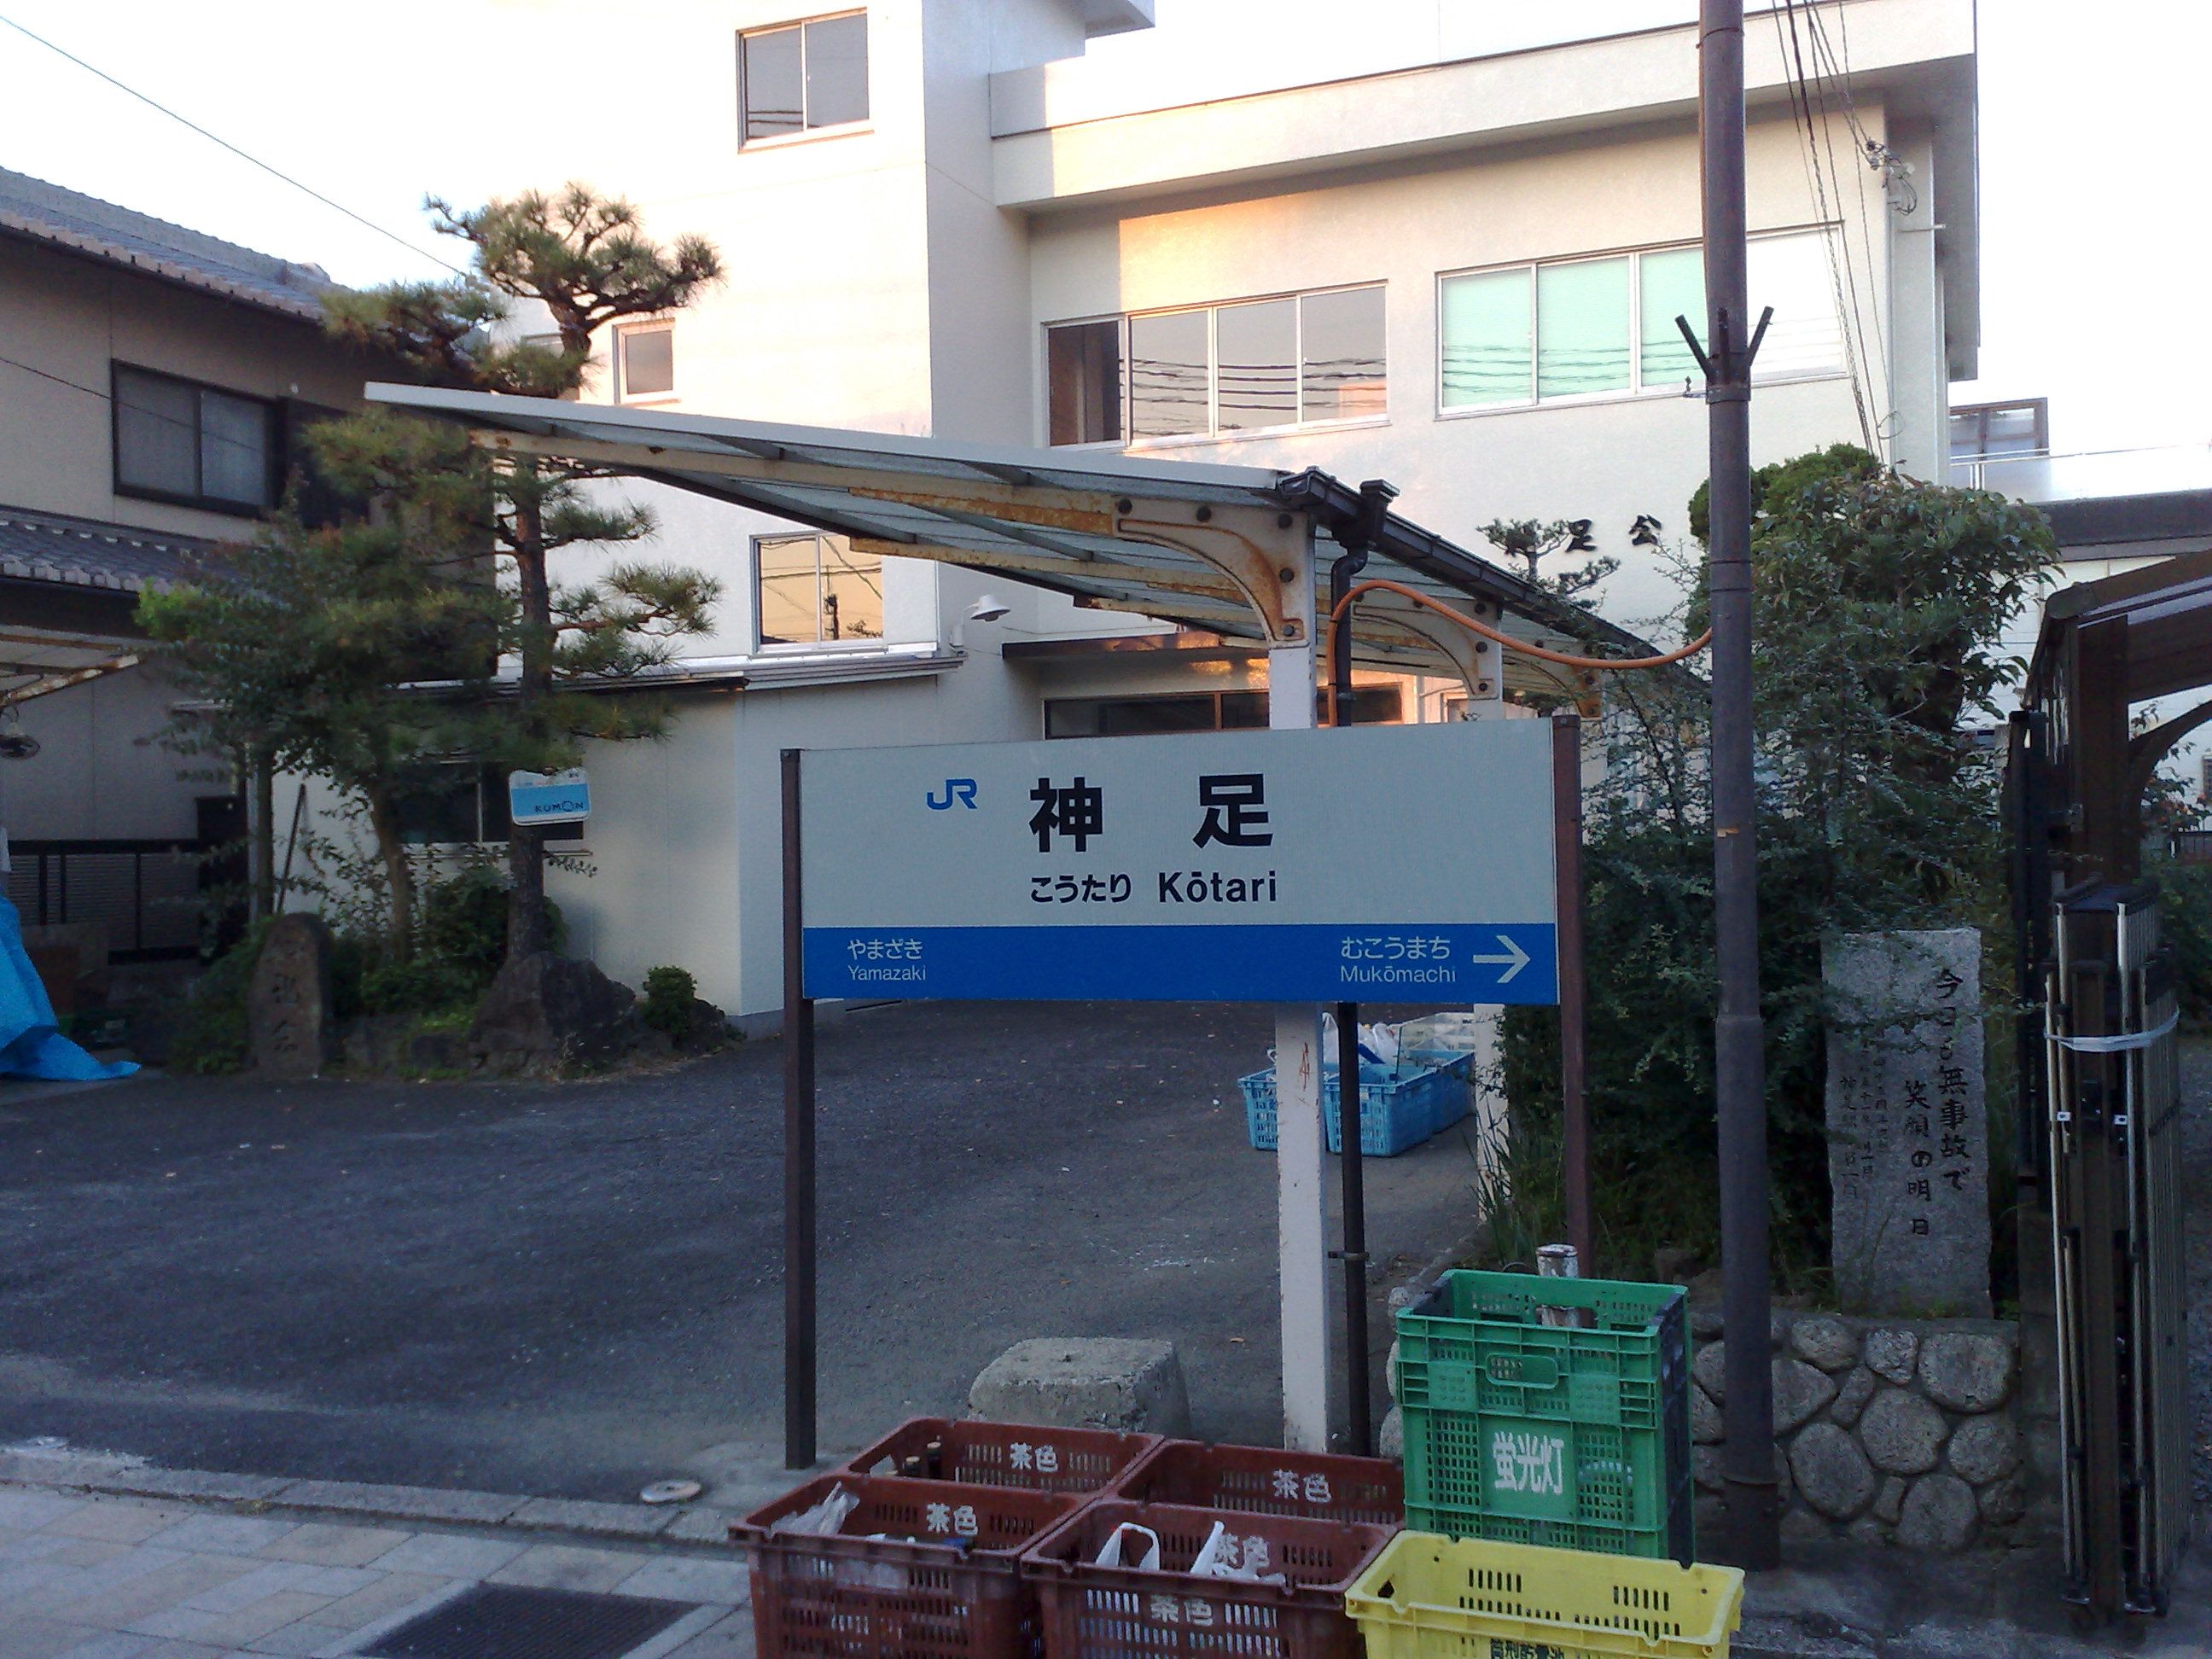 Kotari Station